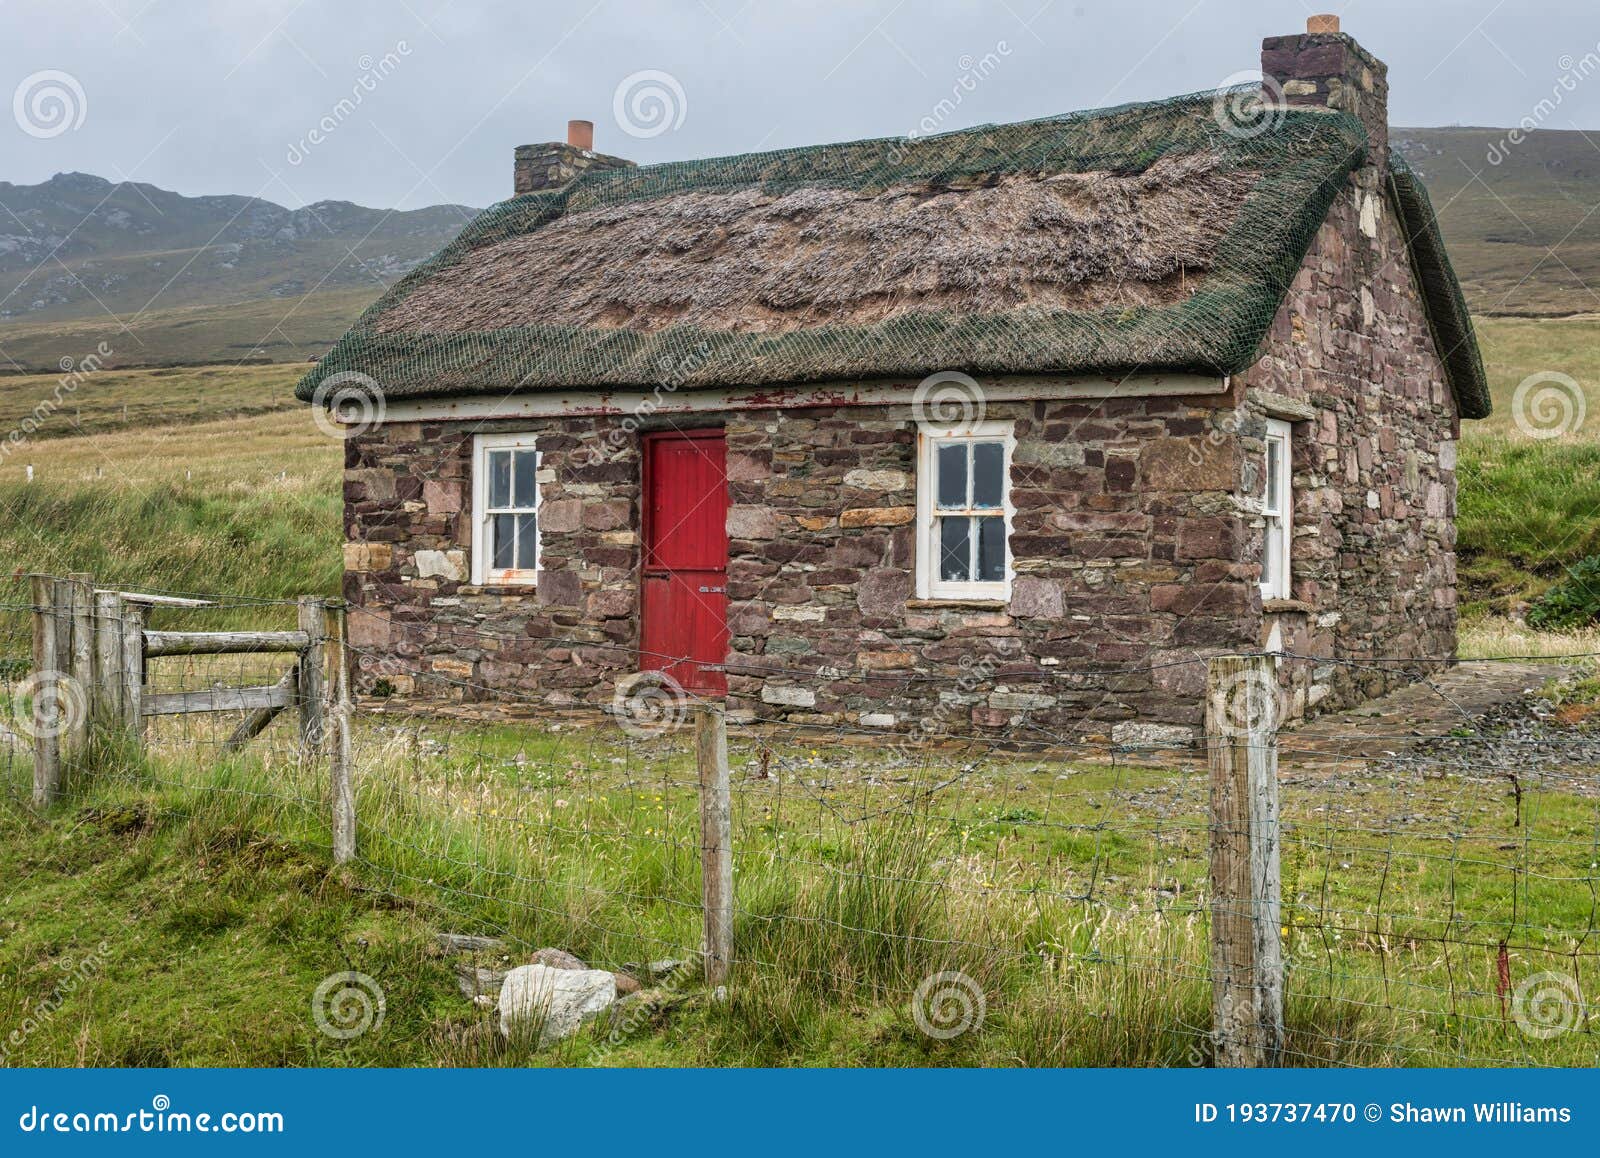 small-irish-cottage-achill-island-ireland-jul-traditional-thatched-193737470.jpg